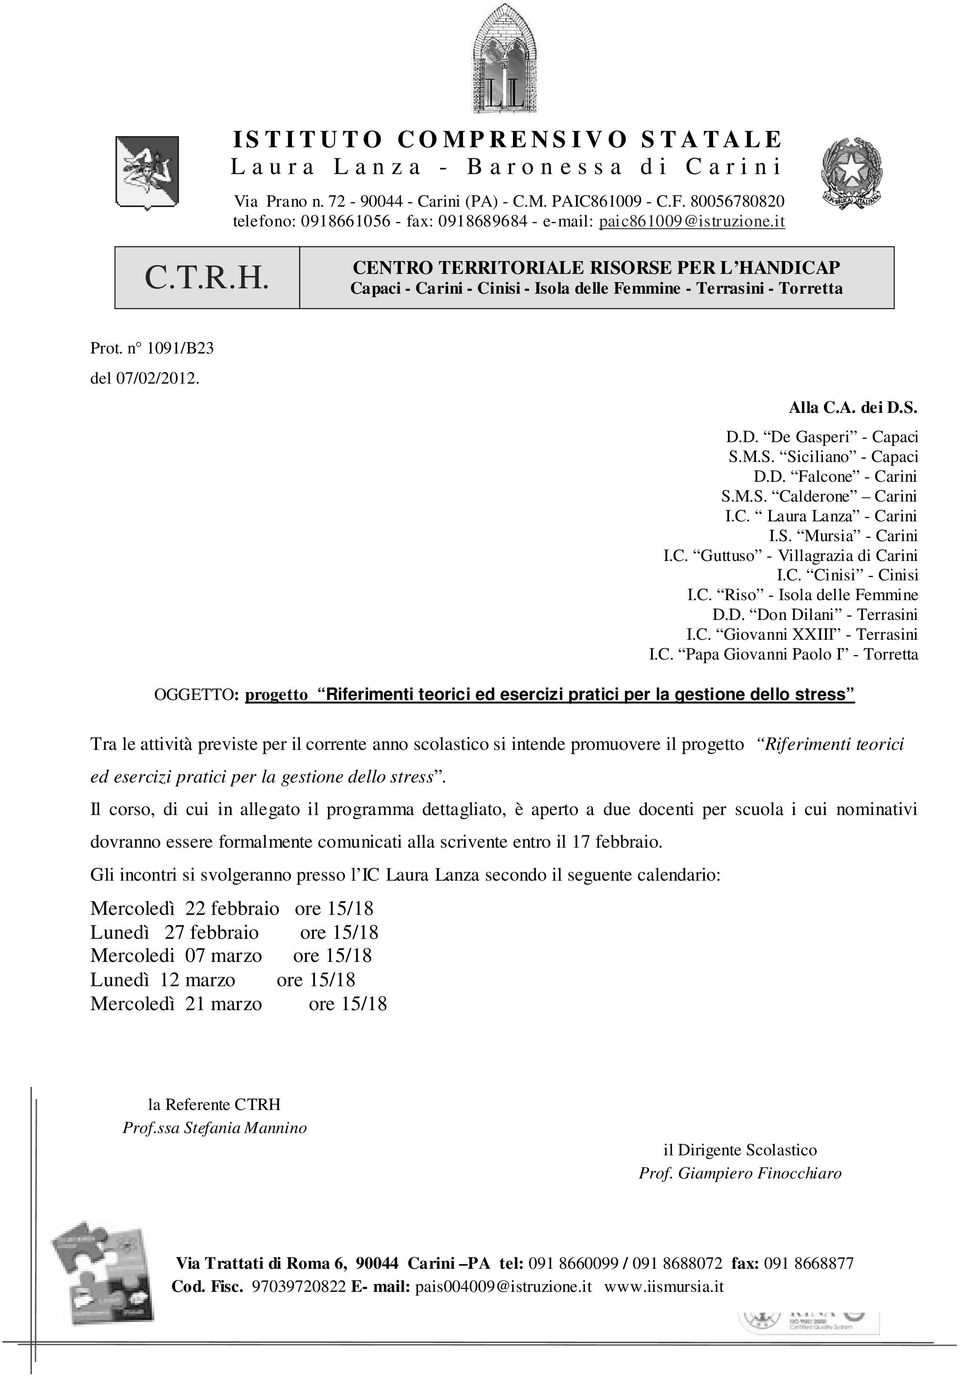 CENTRO TERRITORIALE RISORSE PER L HANDICAP Capaci - Carini - Cinisi - Isola delle Femmine - Terrasini - Torretta Prot. n 1091/B23 del 07/02/2012. Alla C.A. dei D.S. D.D. De Gasperi - Capaci S.M.S. Siciliano - Capaci D.